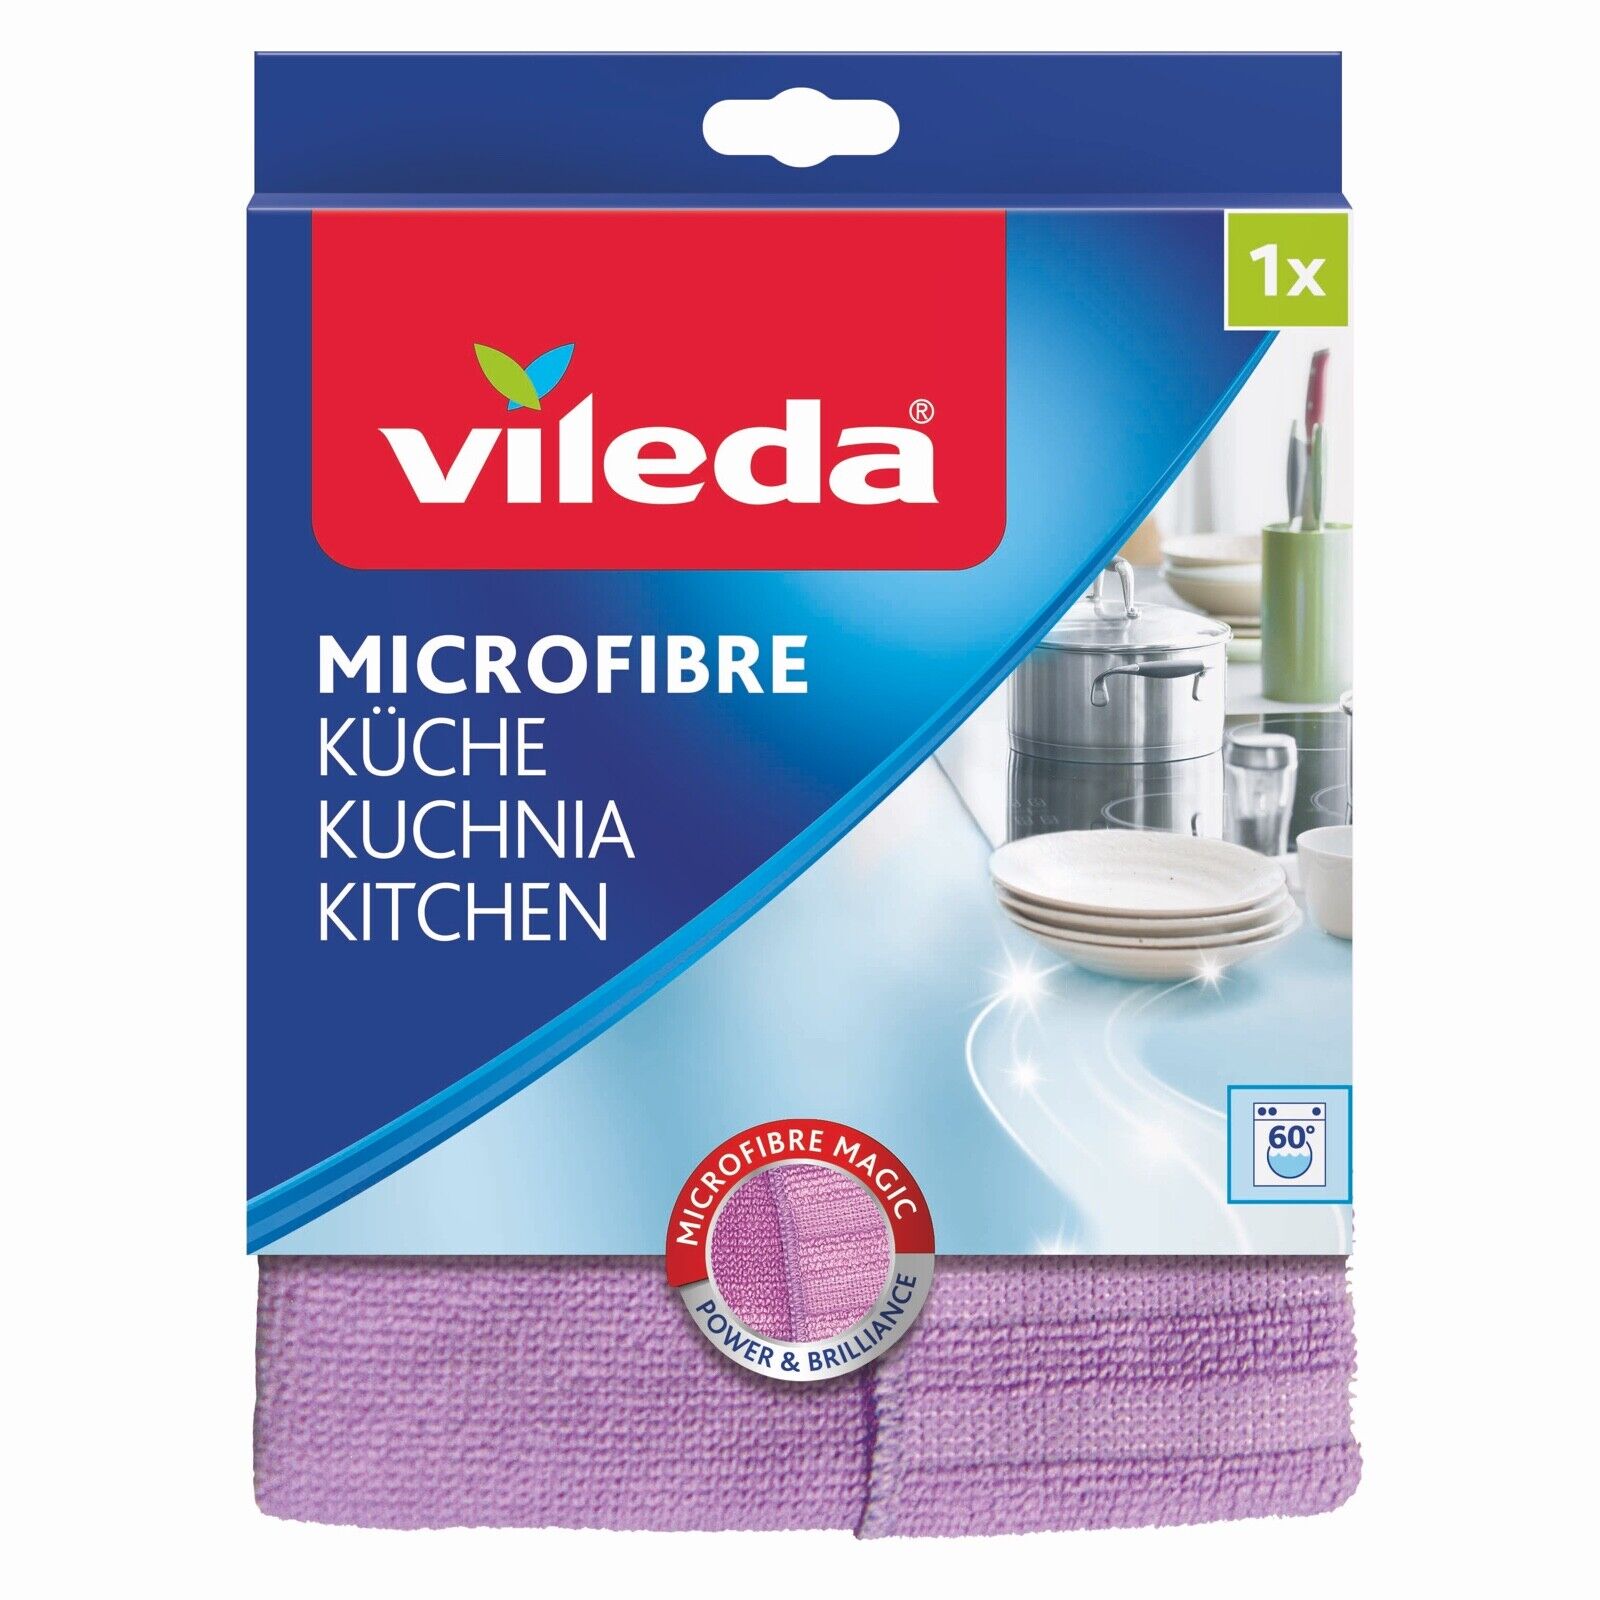 Vileda® Microfibre Küchentuch 2in1